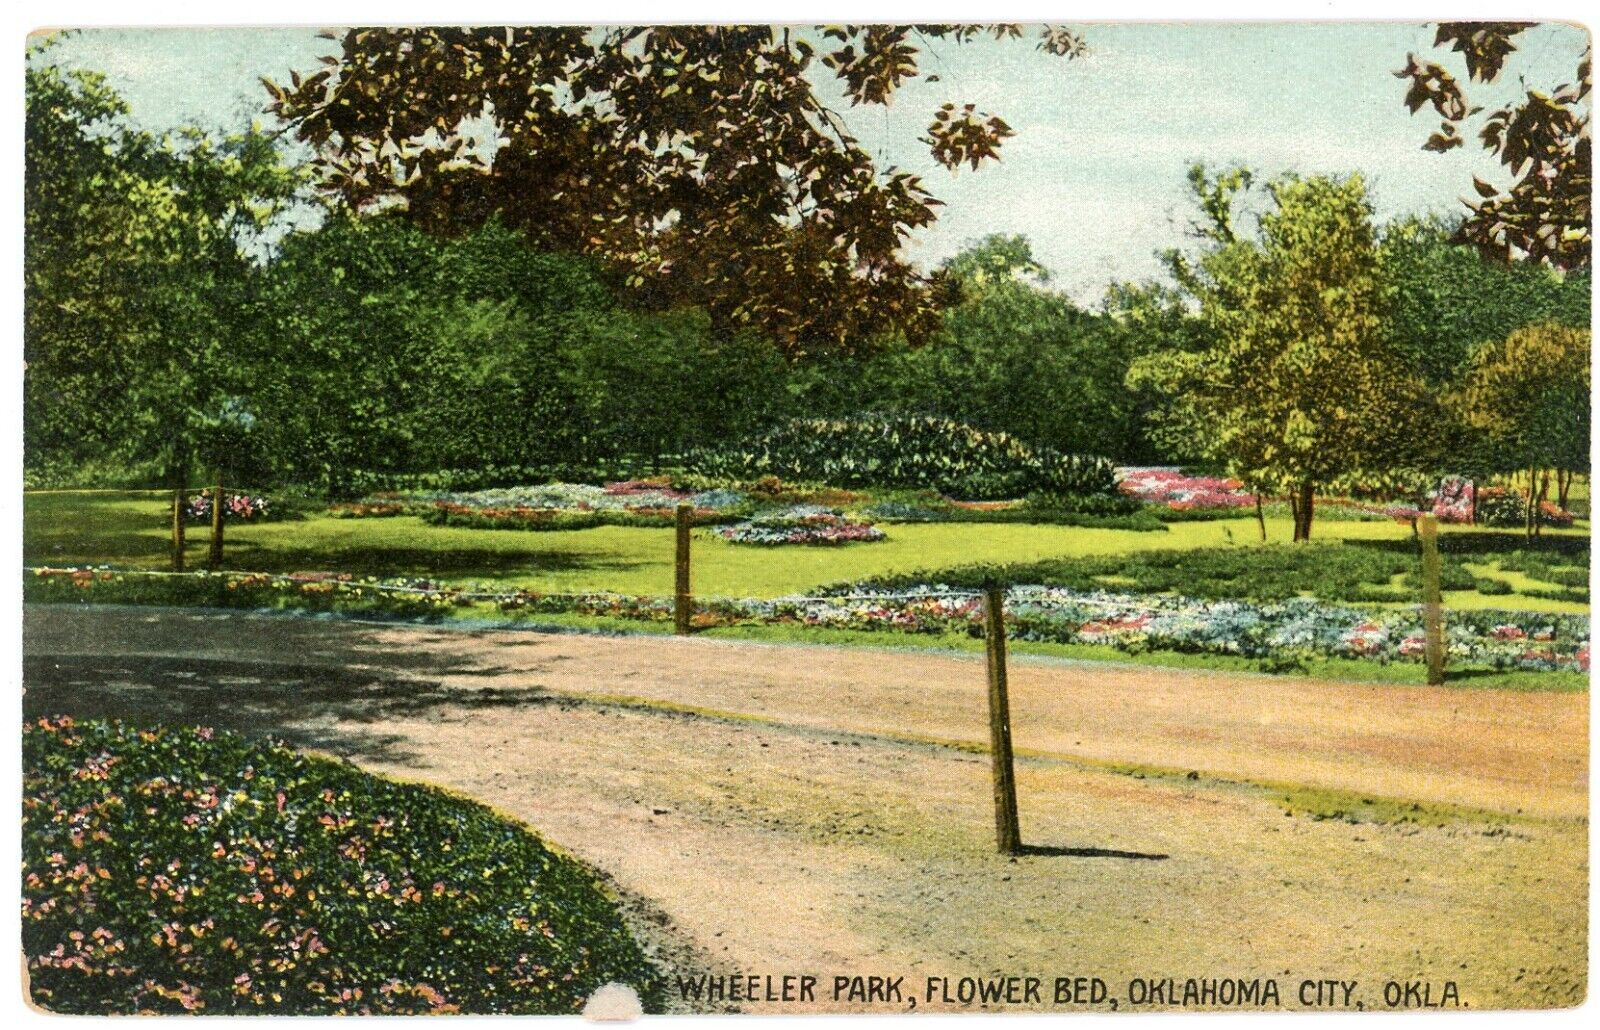 1910S WHEELER PARK FLOWER BED OKLAHOMA CITY OK. ANTIQUE POSTCARD